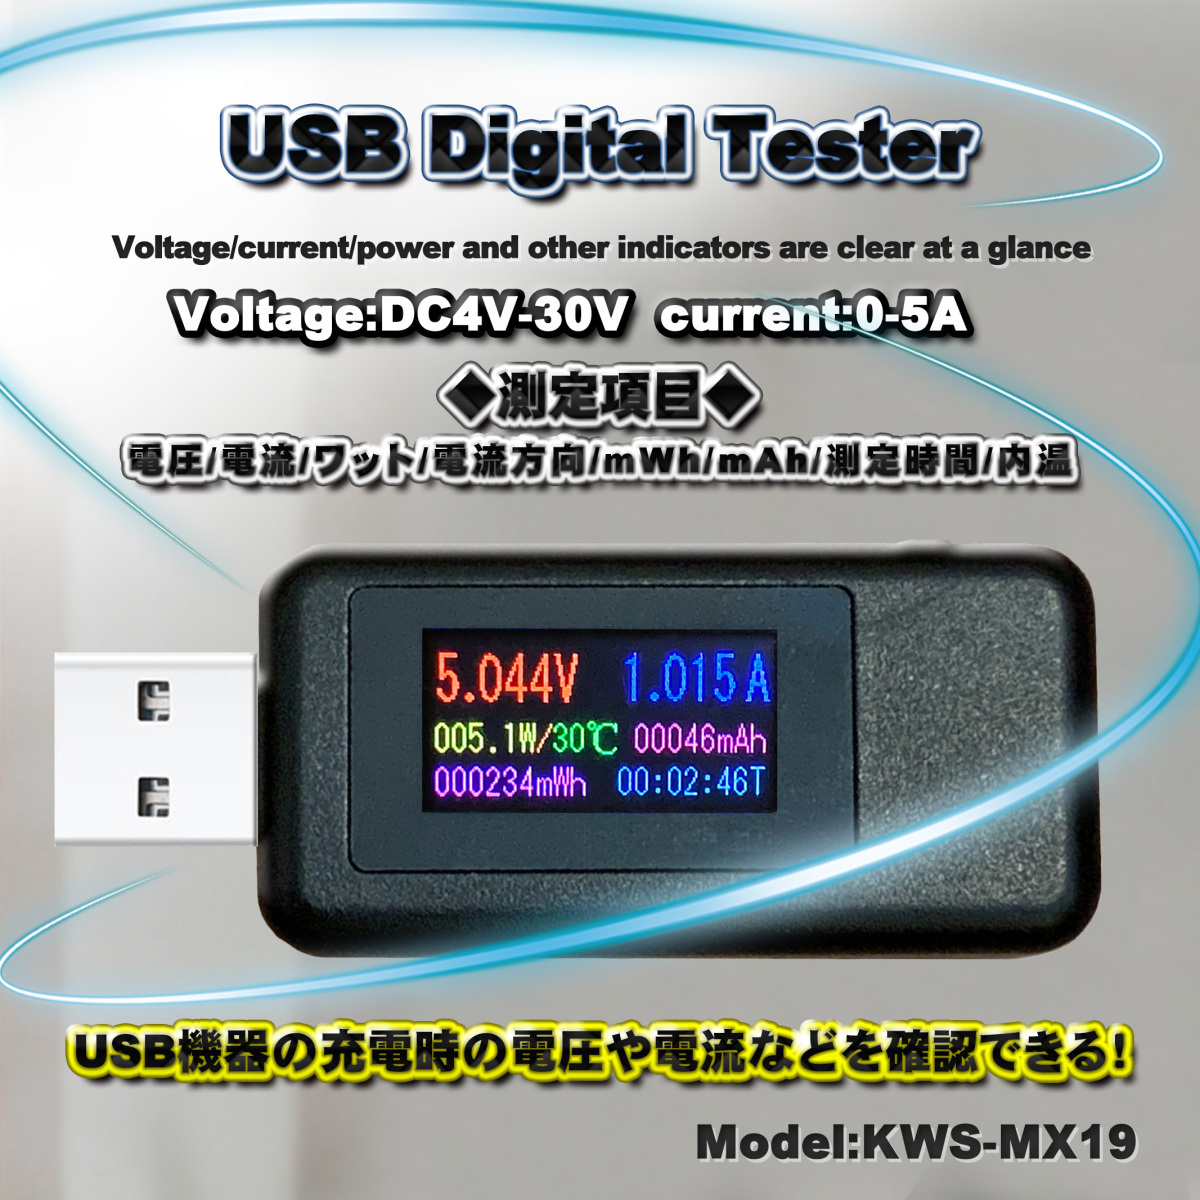 USB テスター 0-5.1A USB 電流 電圧 テスター チェッカー 4-30V DC表示 充電器検出器 KWS-MX19【ブラック】の画像1